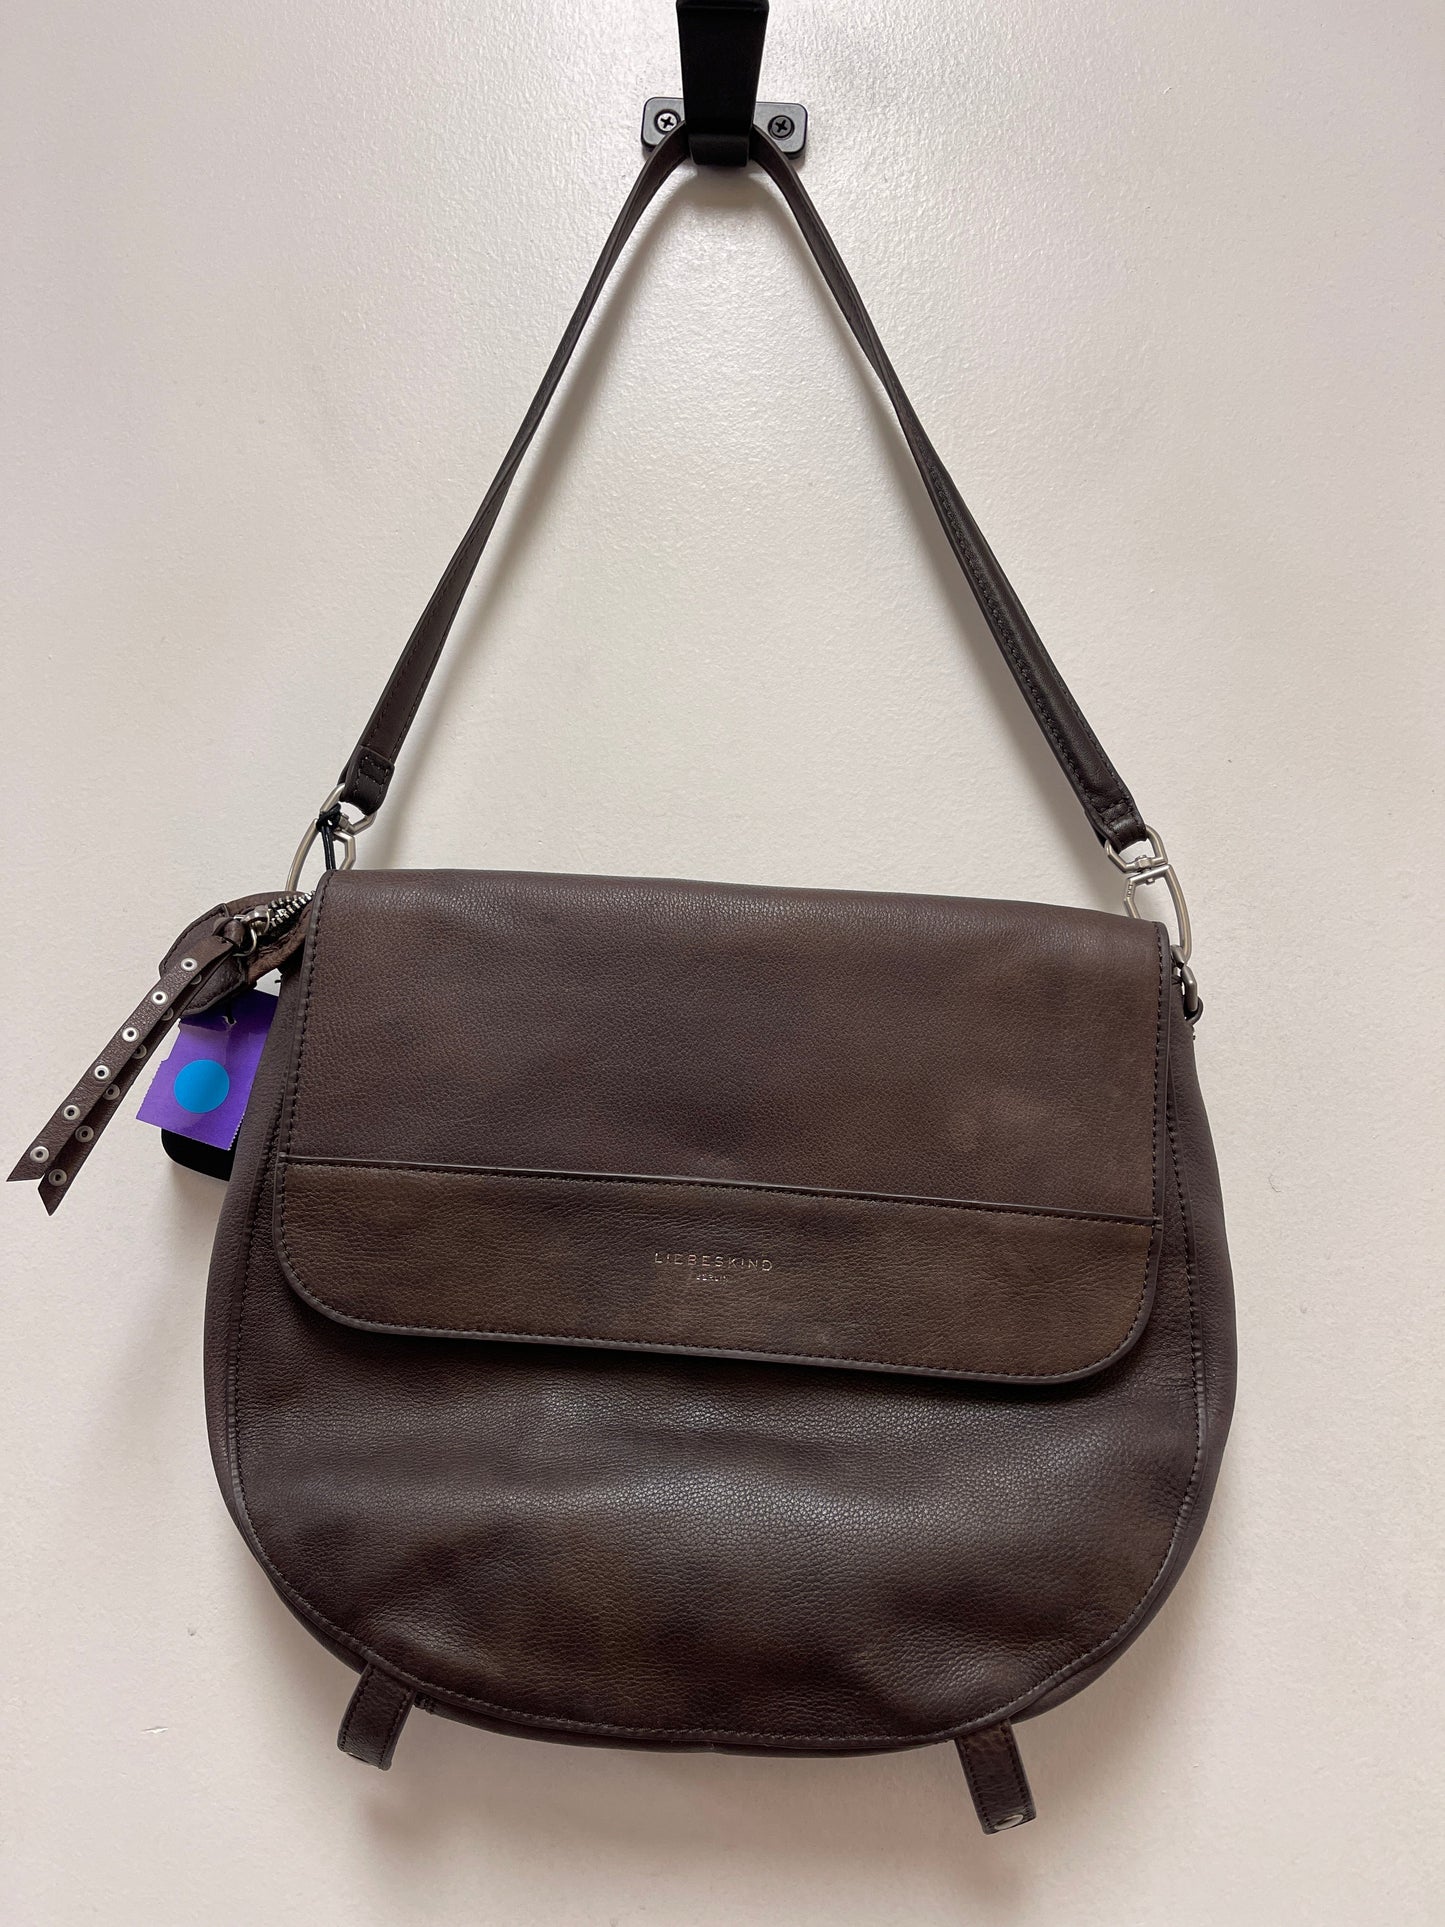 Handbag Leather Liebeskind, Size Large